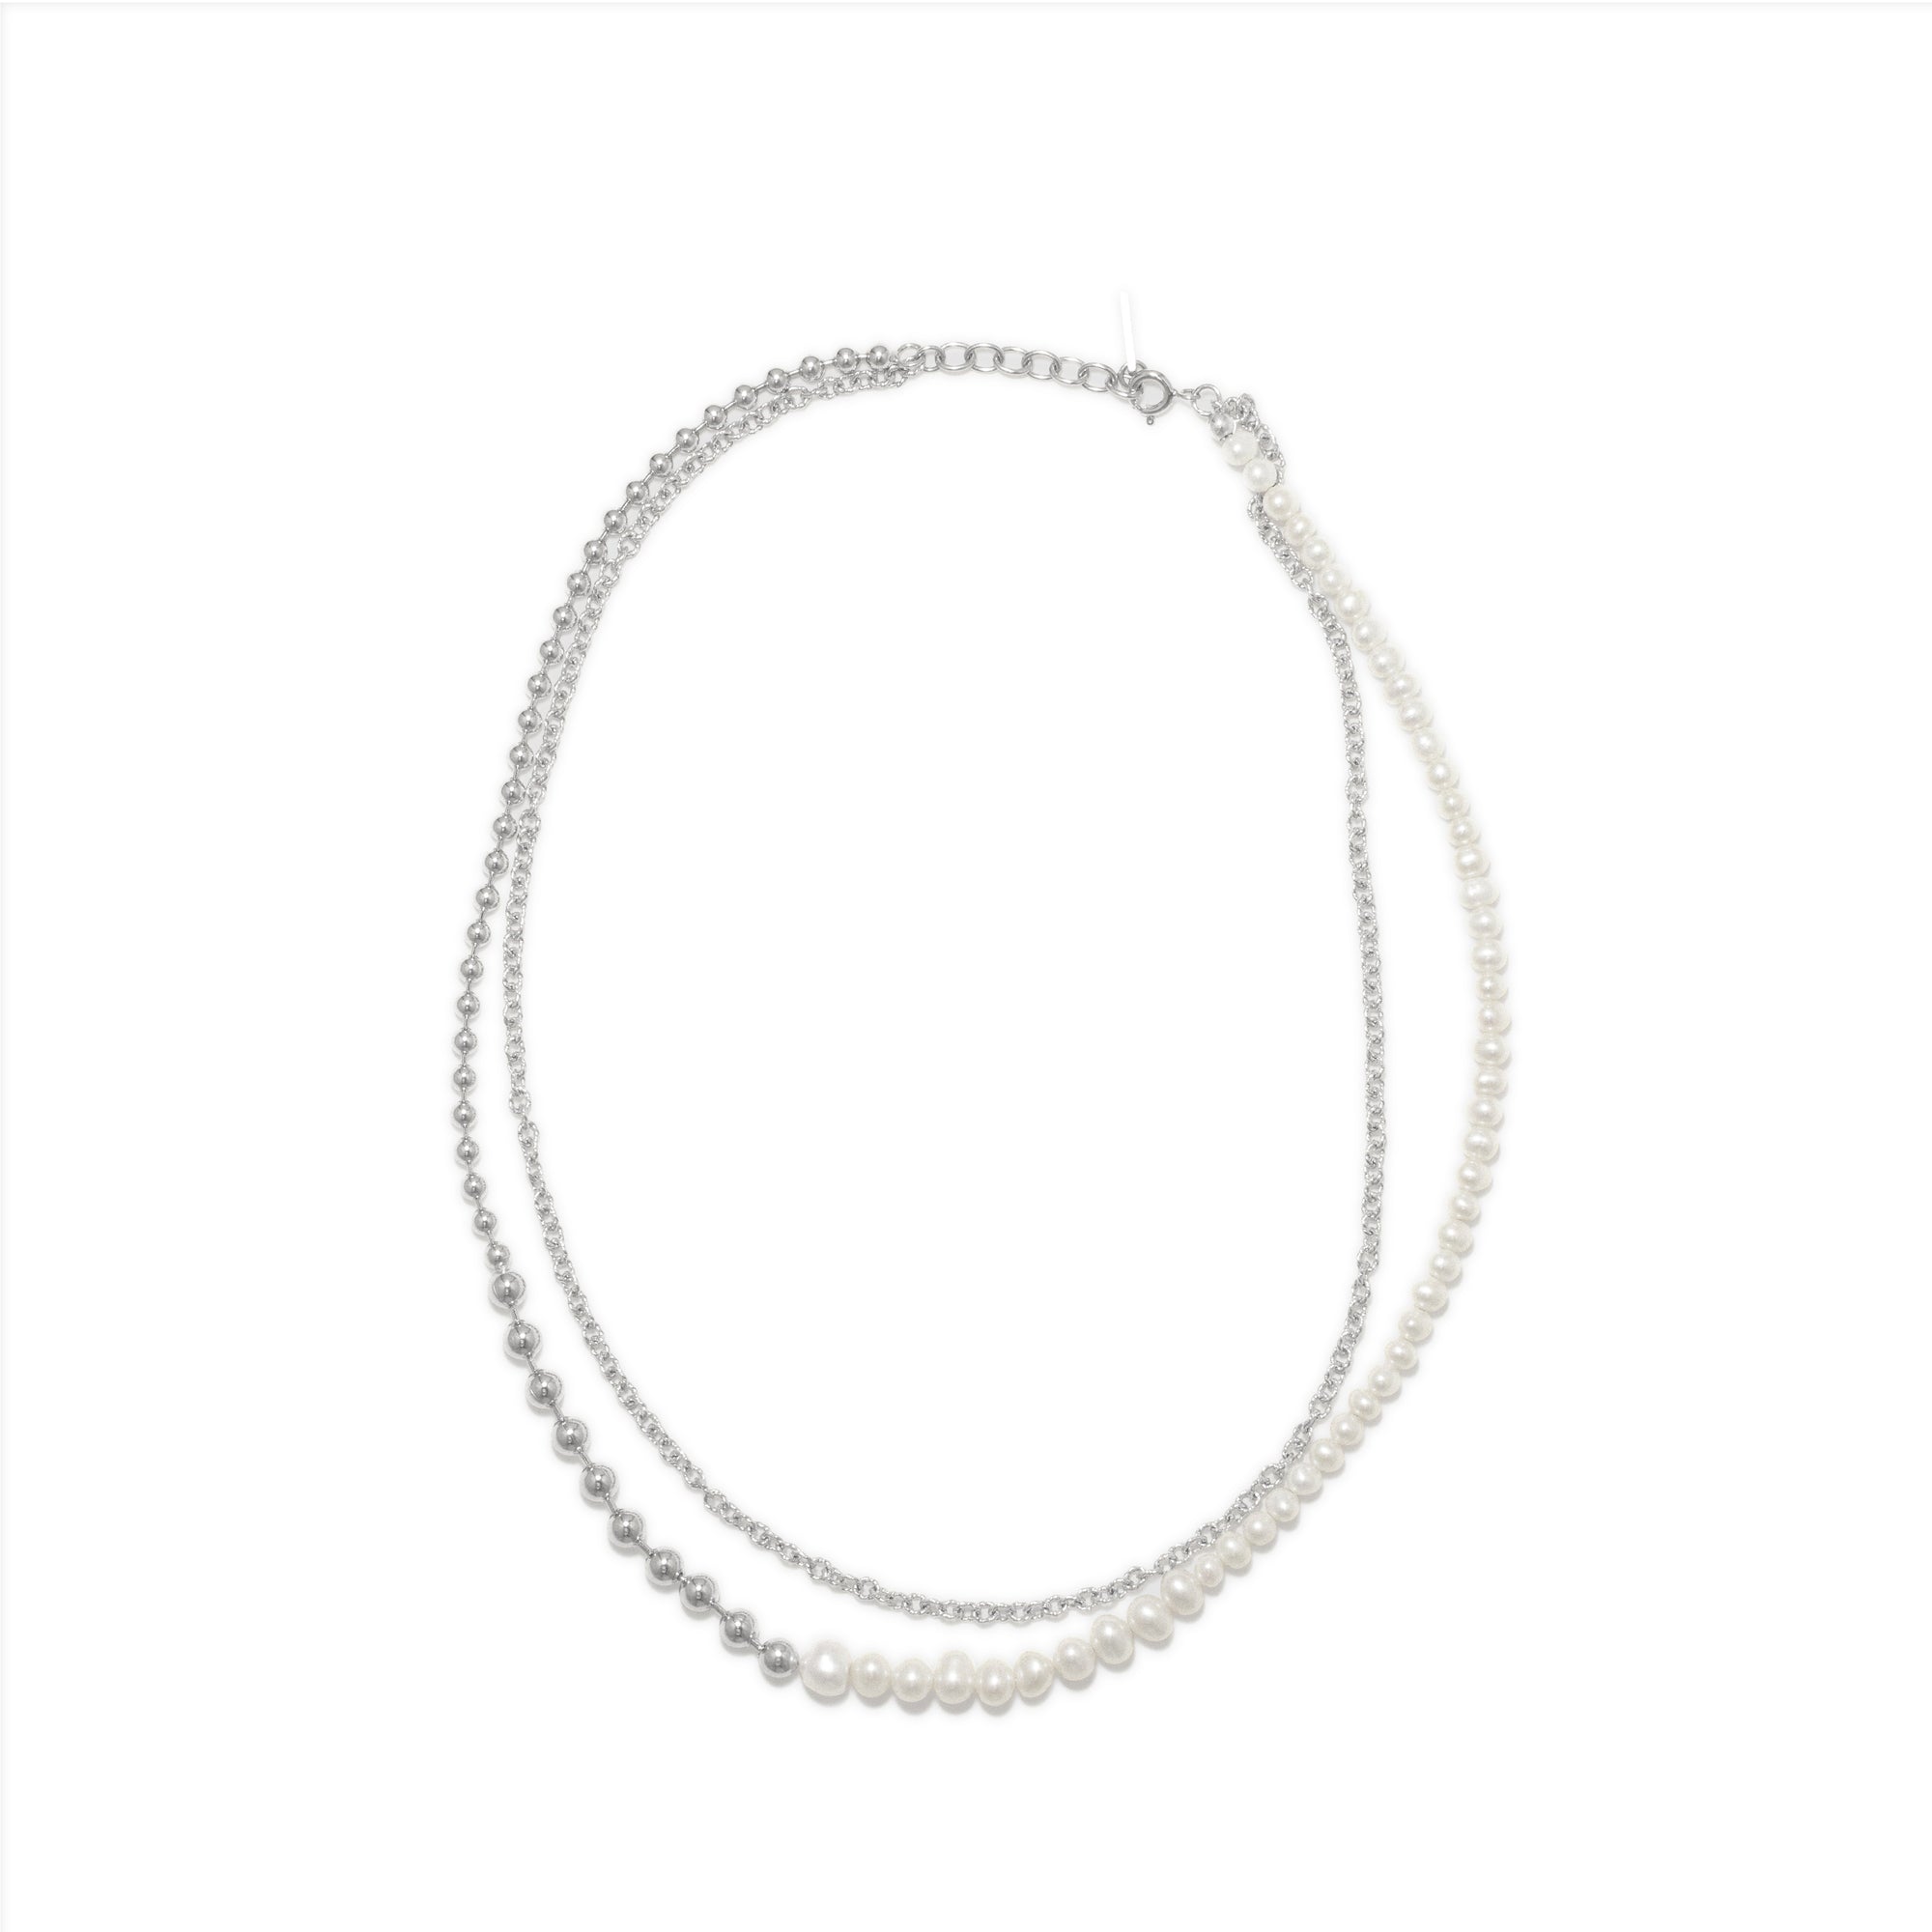 Completedworks - Women's Forgotten Seas Necklace - (Pearl/Rhodium Plat ...